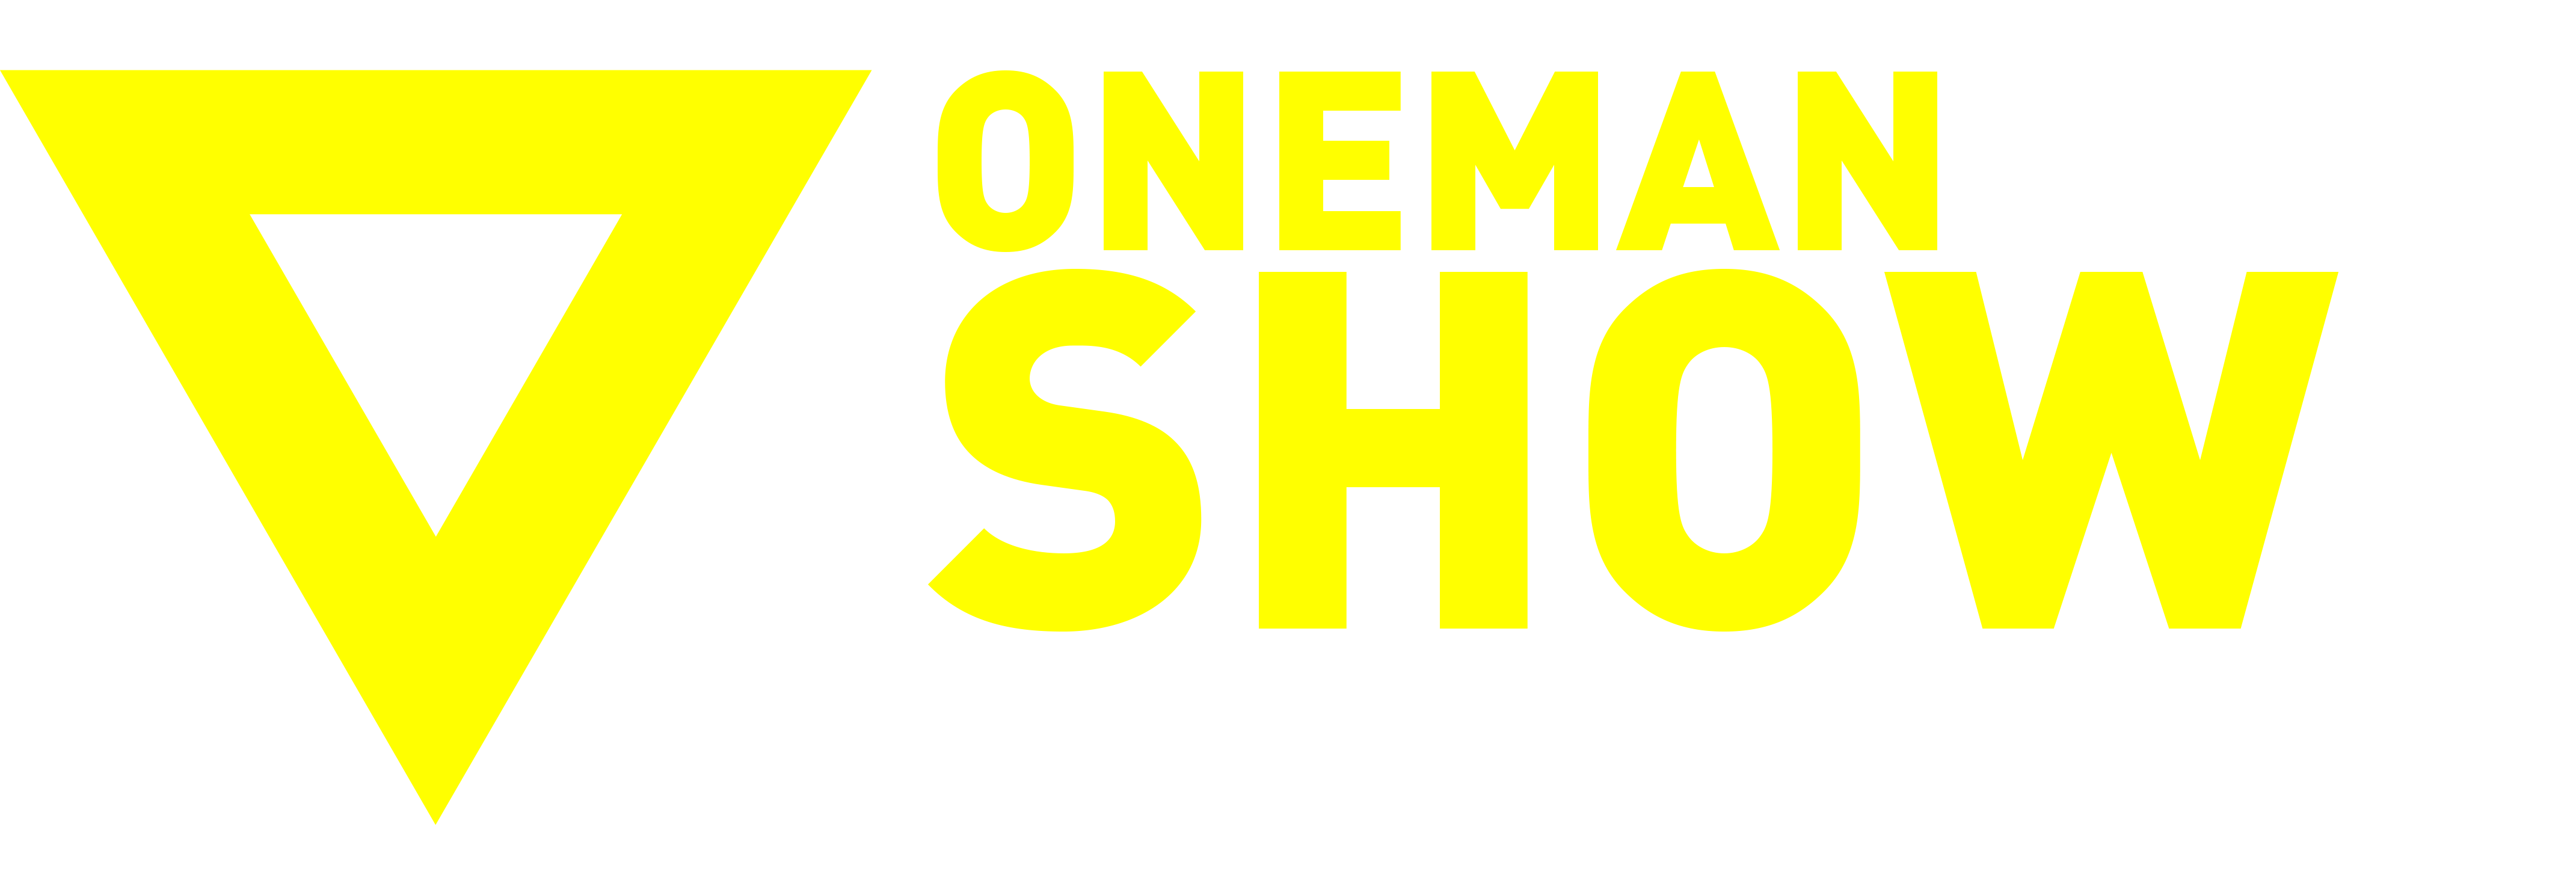 ONEMANSHOW YES MAN (2015)